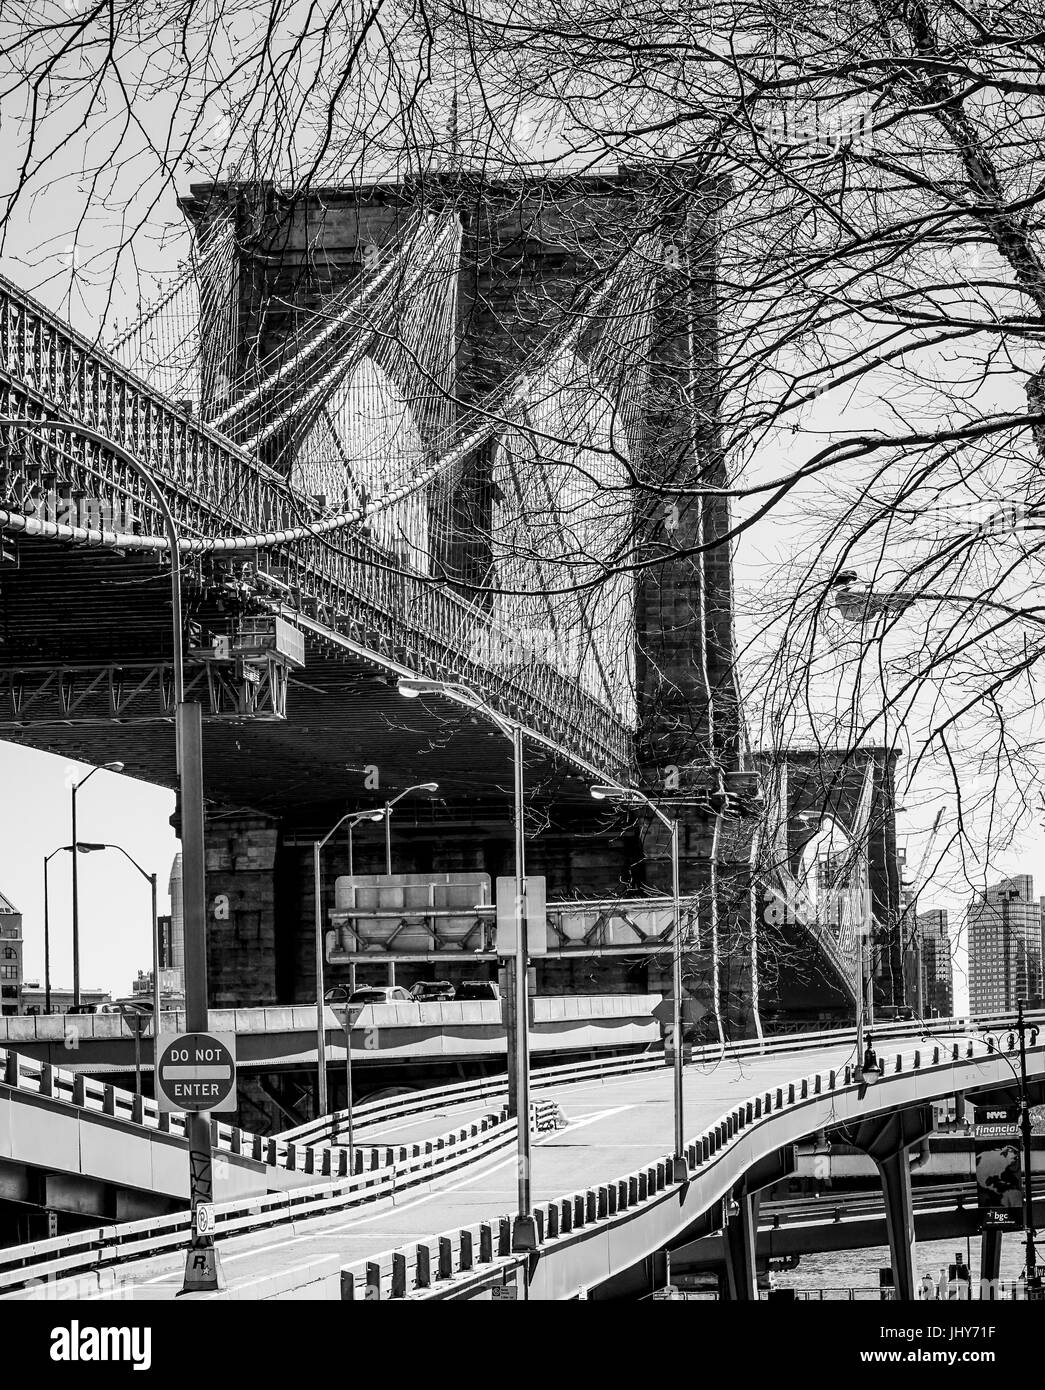 Amazing Brooklyn Bridge in New York - iconic landmark - MANHATTAN / NEW YORK - APRIL 2, 2017 Stock Photo